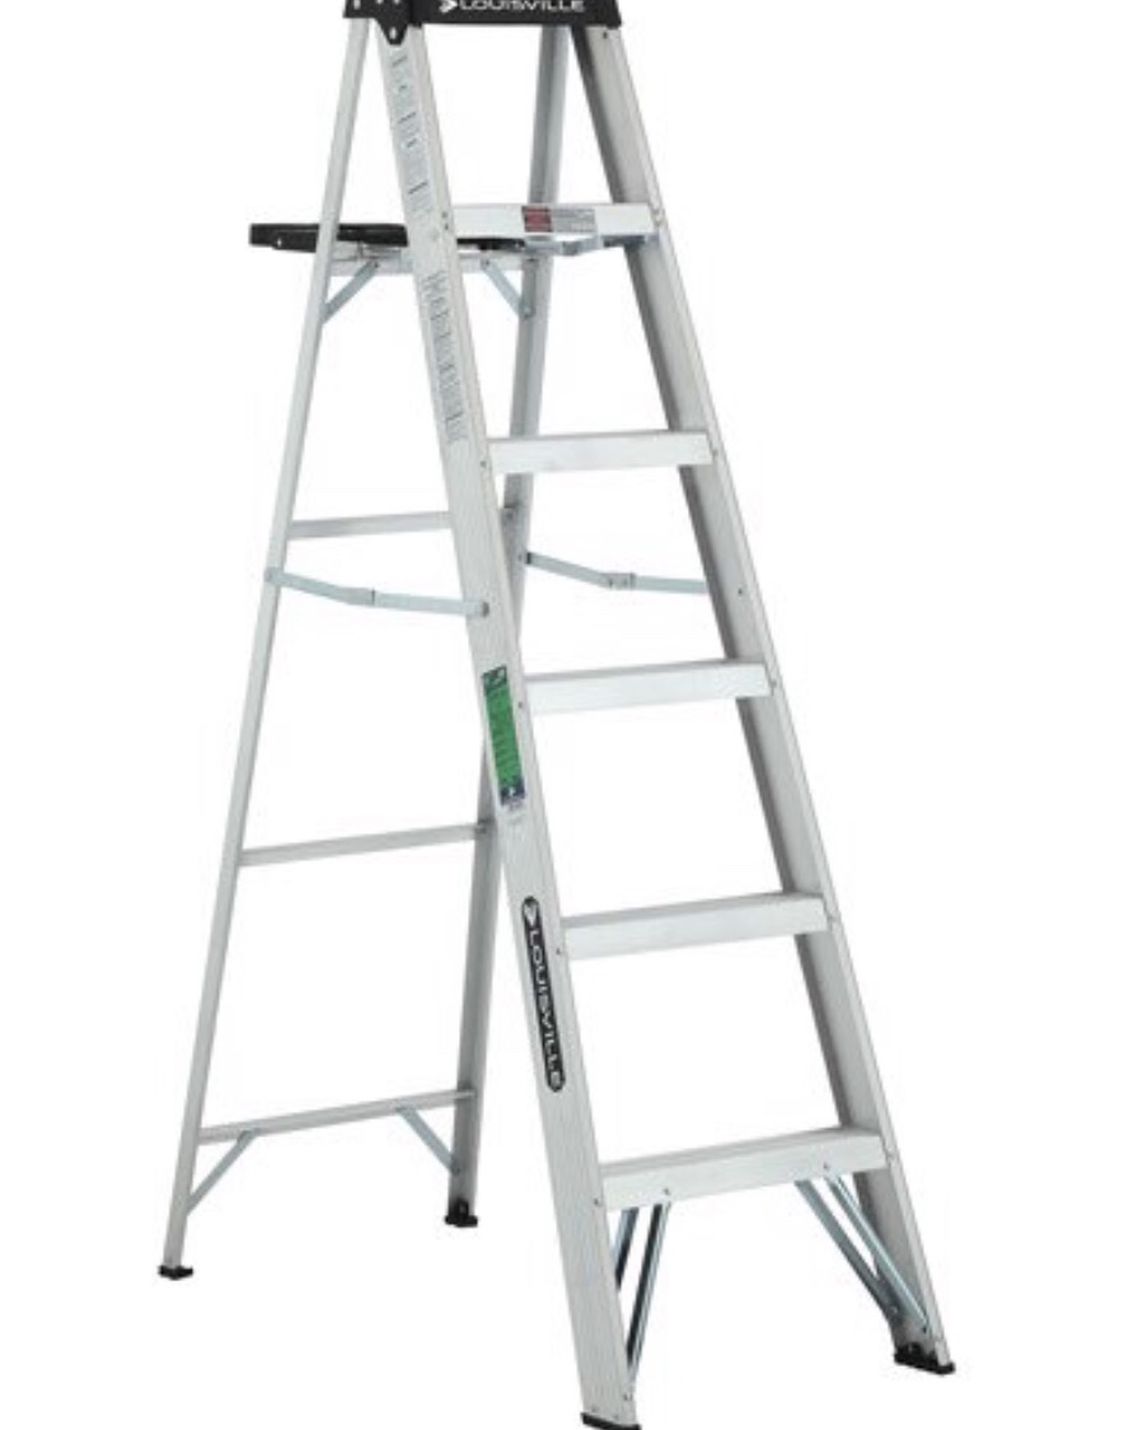 6’ Sturdy Aluminum Ladder